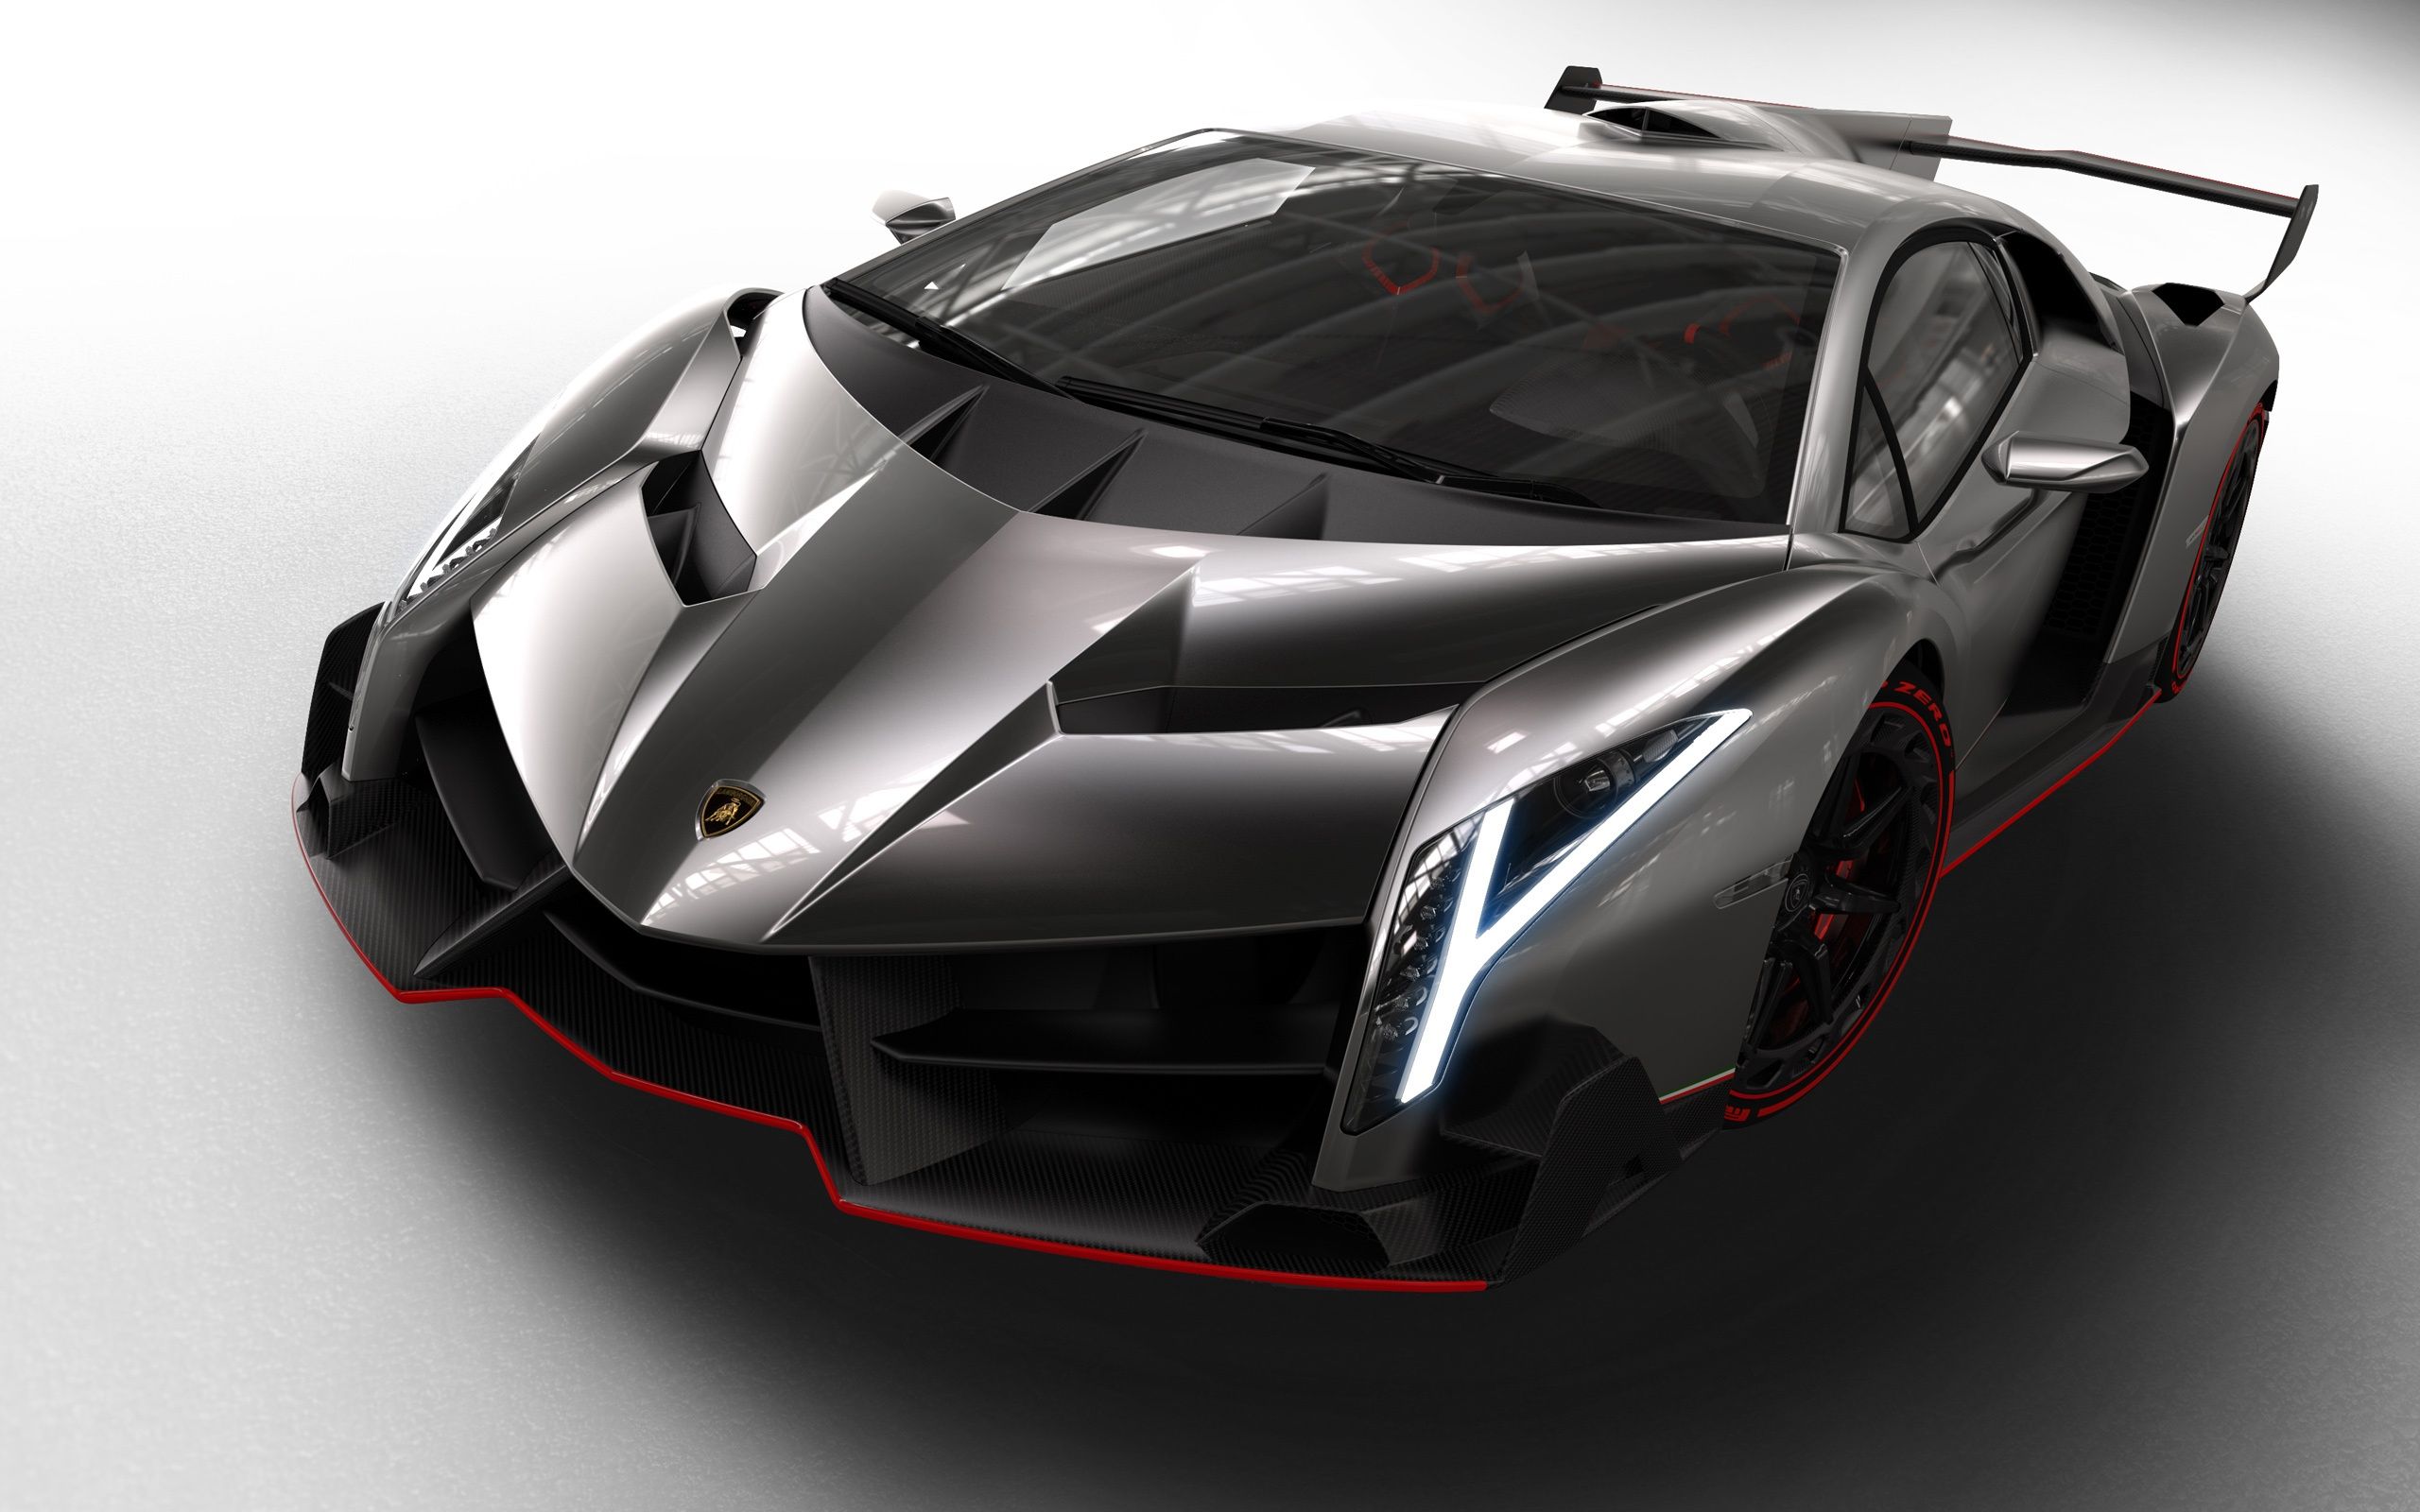  Coole Auto Hintergrundbild 2560x1600. Lamborghini Veneno, sehr Cool car 2560x1600 HD Hintergrundbilder, HD, Bild